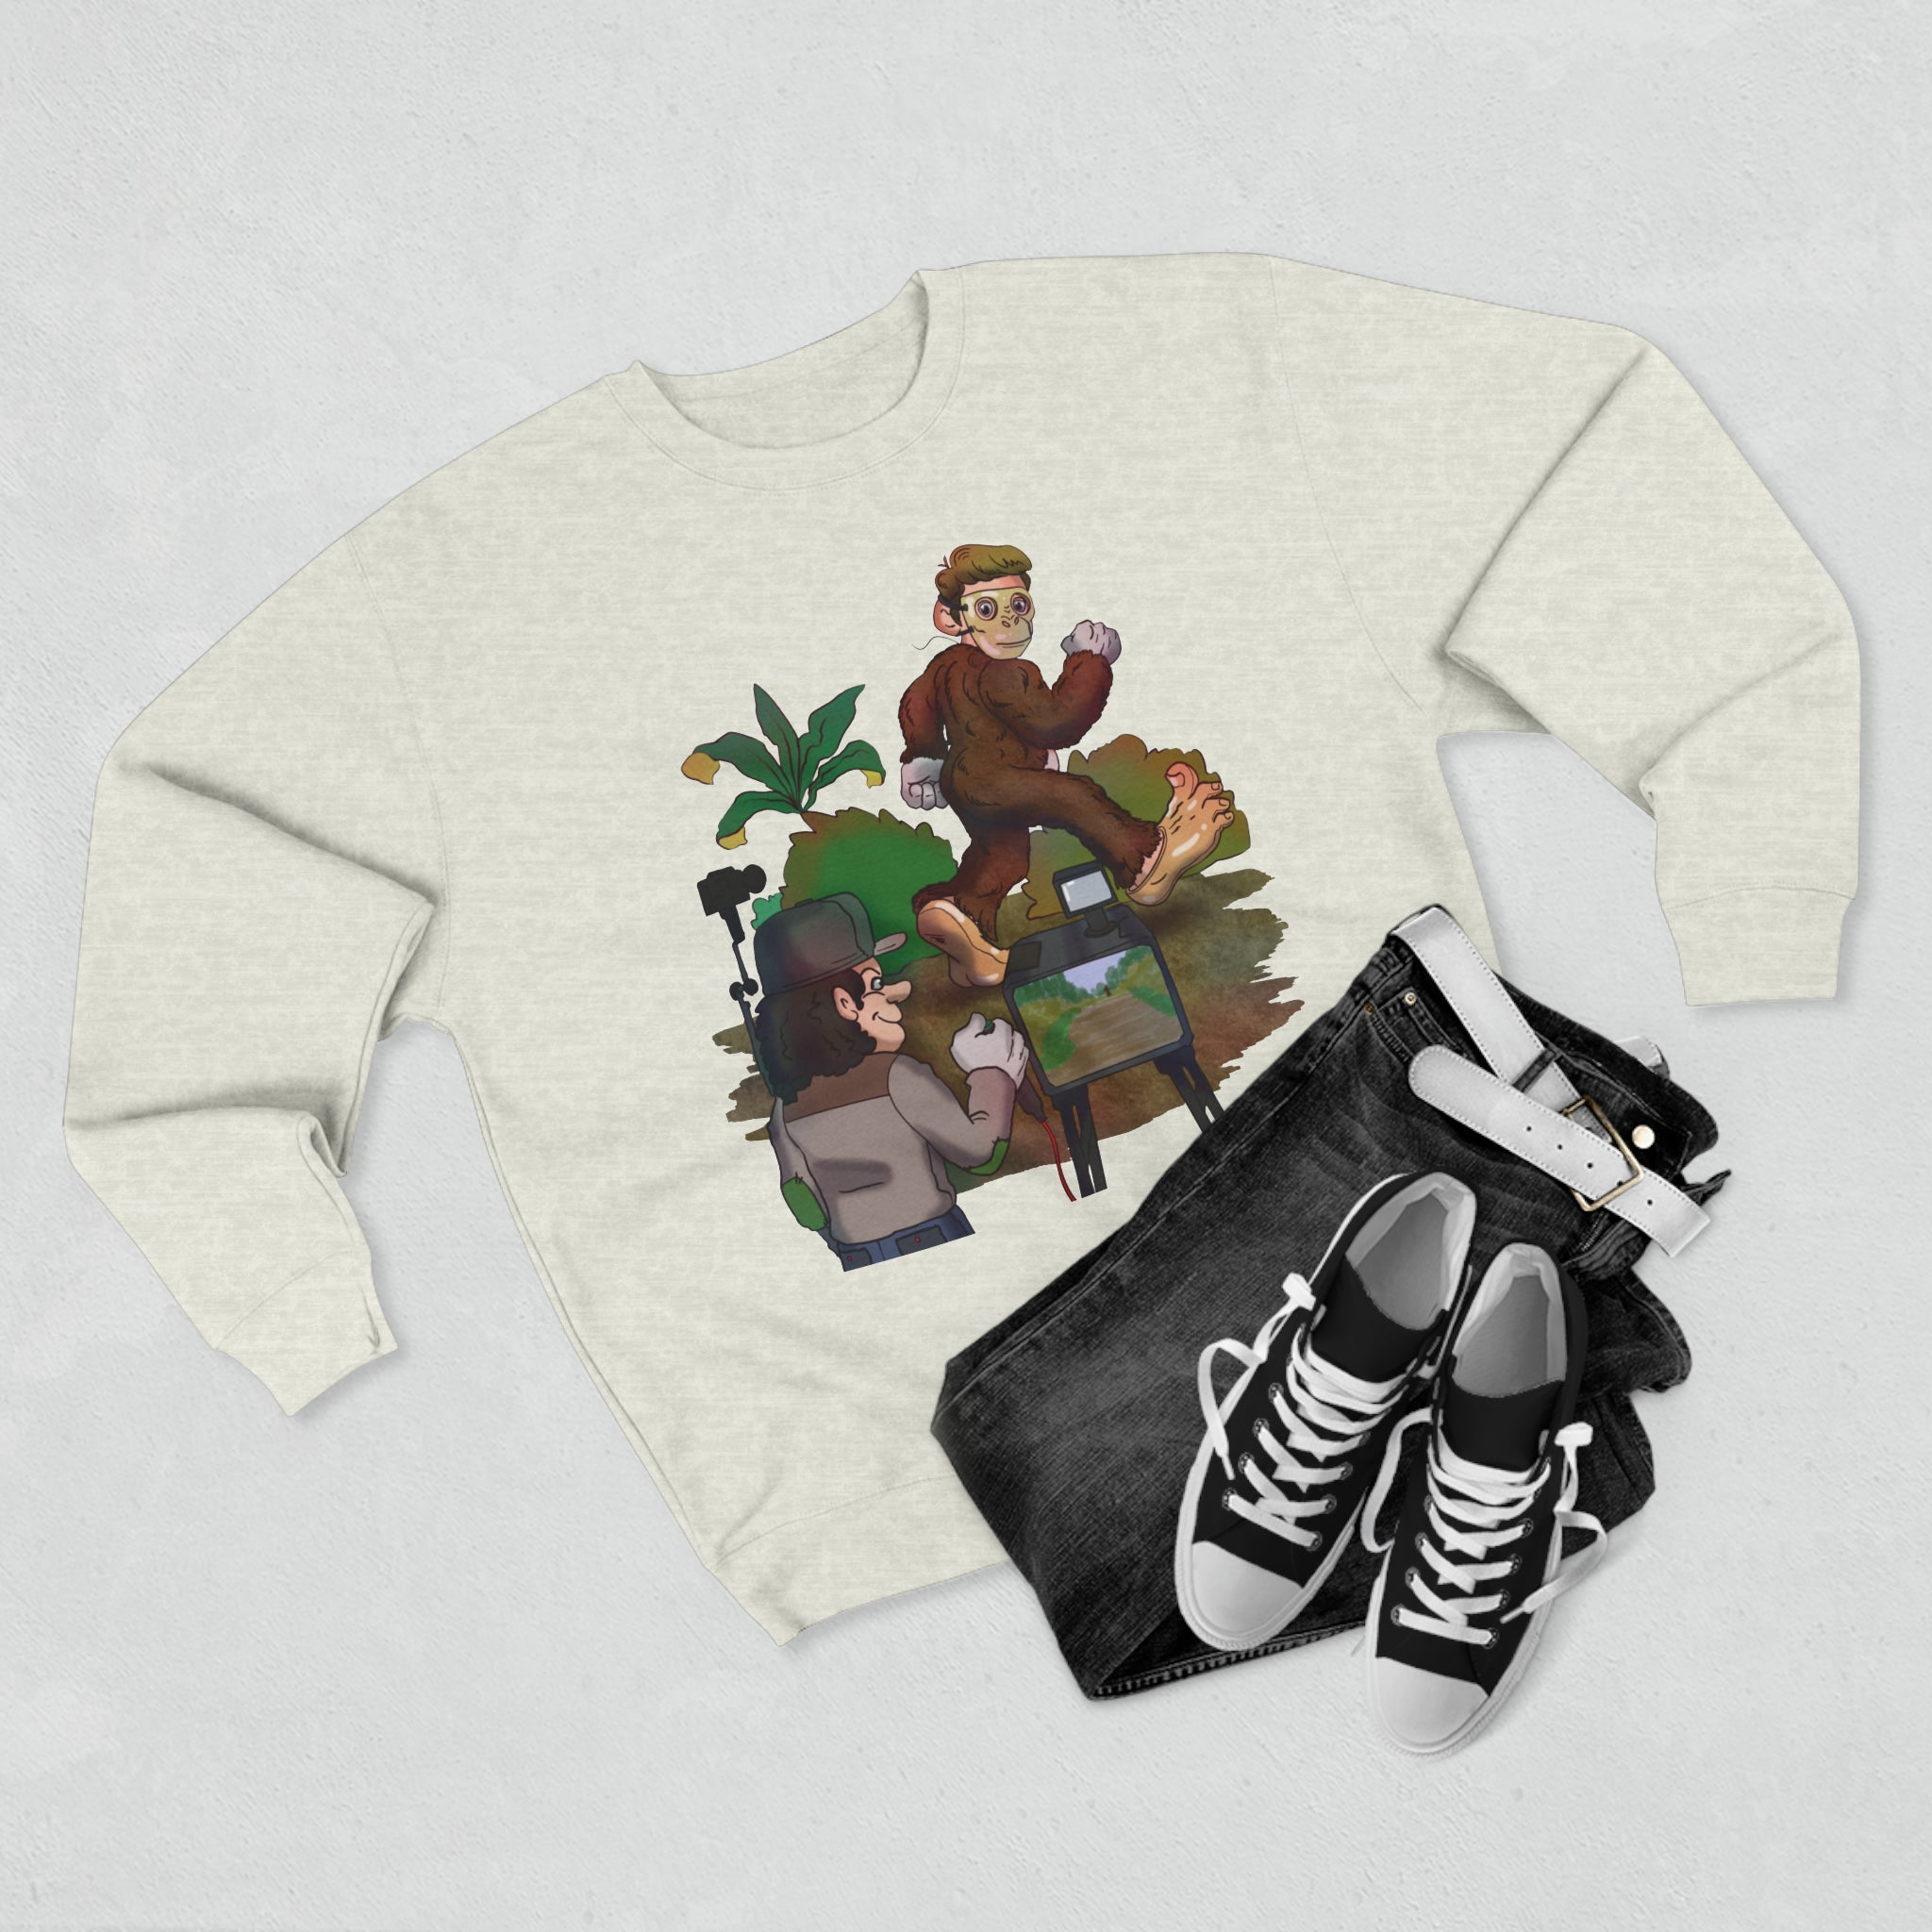 Bigfoot Blooper Sweatshirt-Bold By Design 